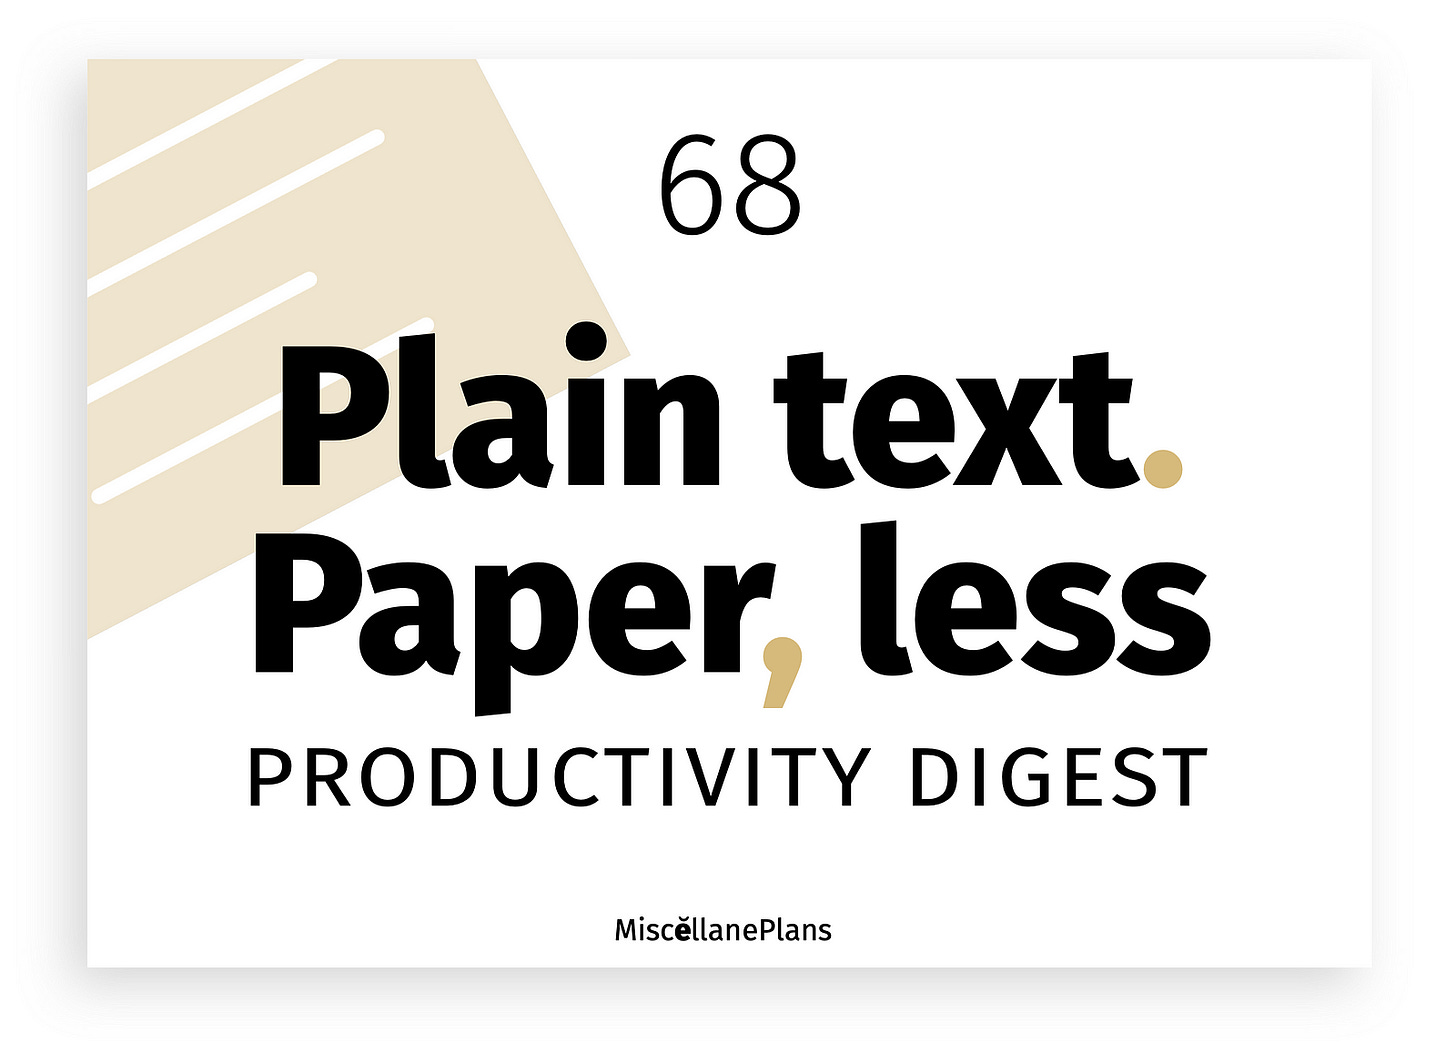 Plain text, Paper, Less (PTPL) Productivity Digest, text-based image by Author